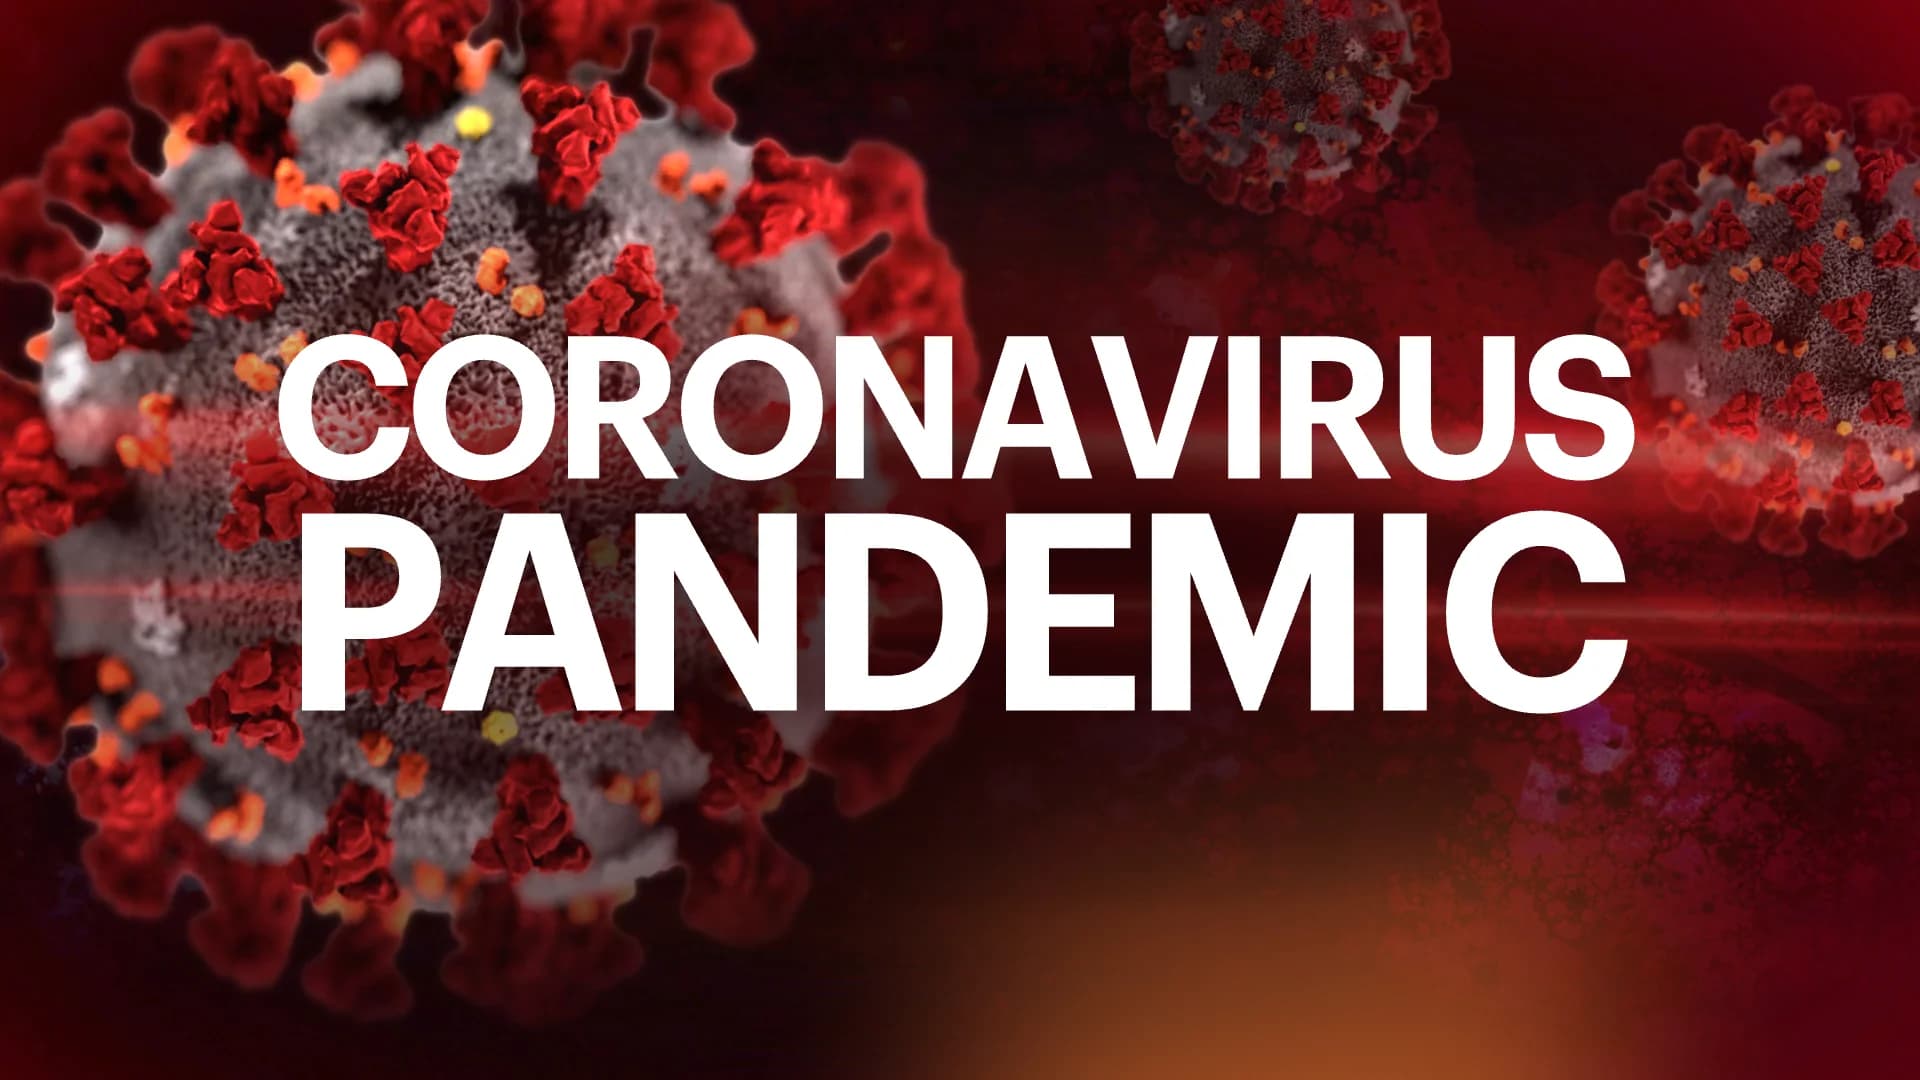 NYC set to receive thousands of doses of Moderna's coronavirus vaccine